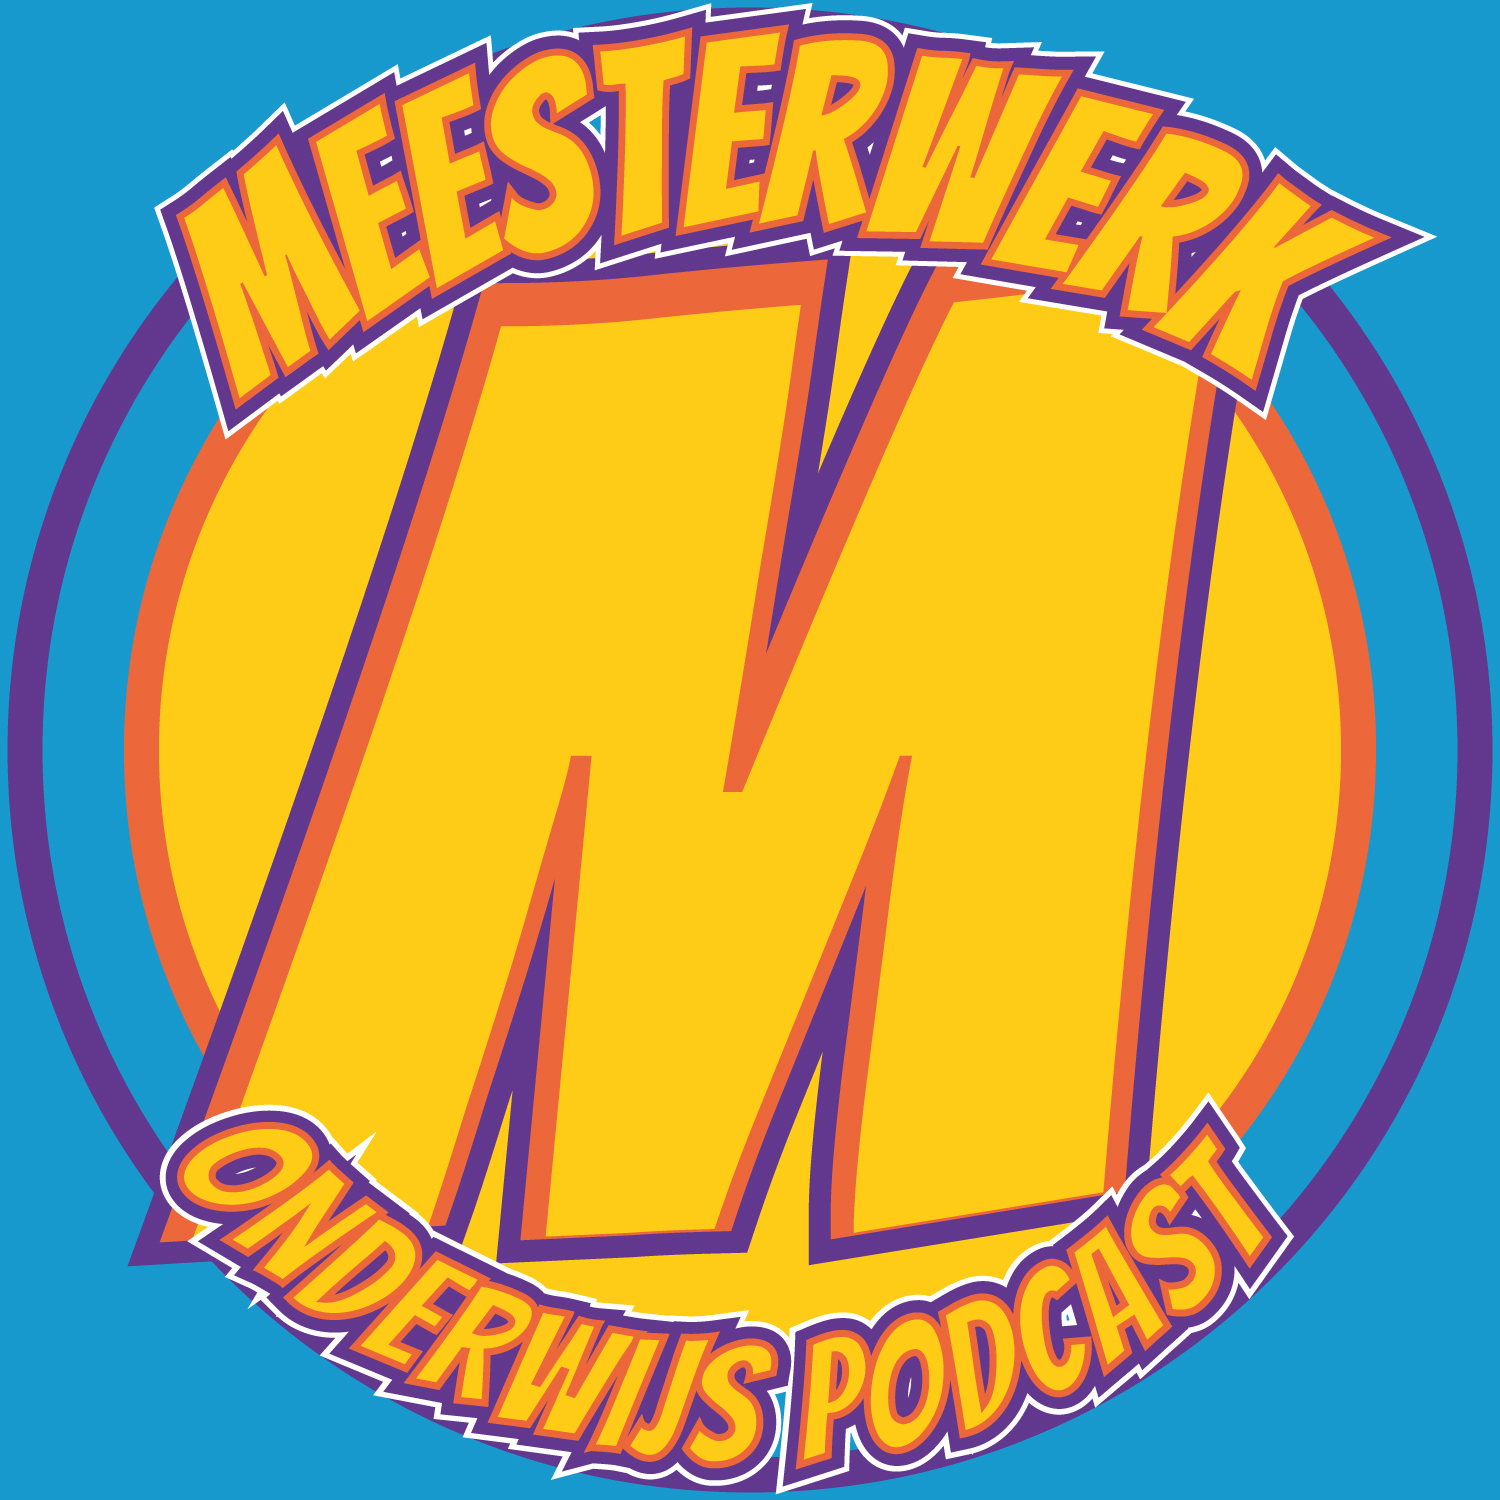 Show artwork for Meesterwerk Podcast